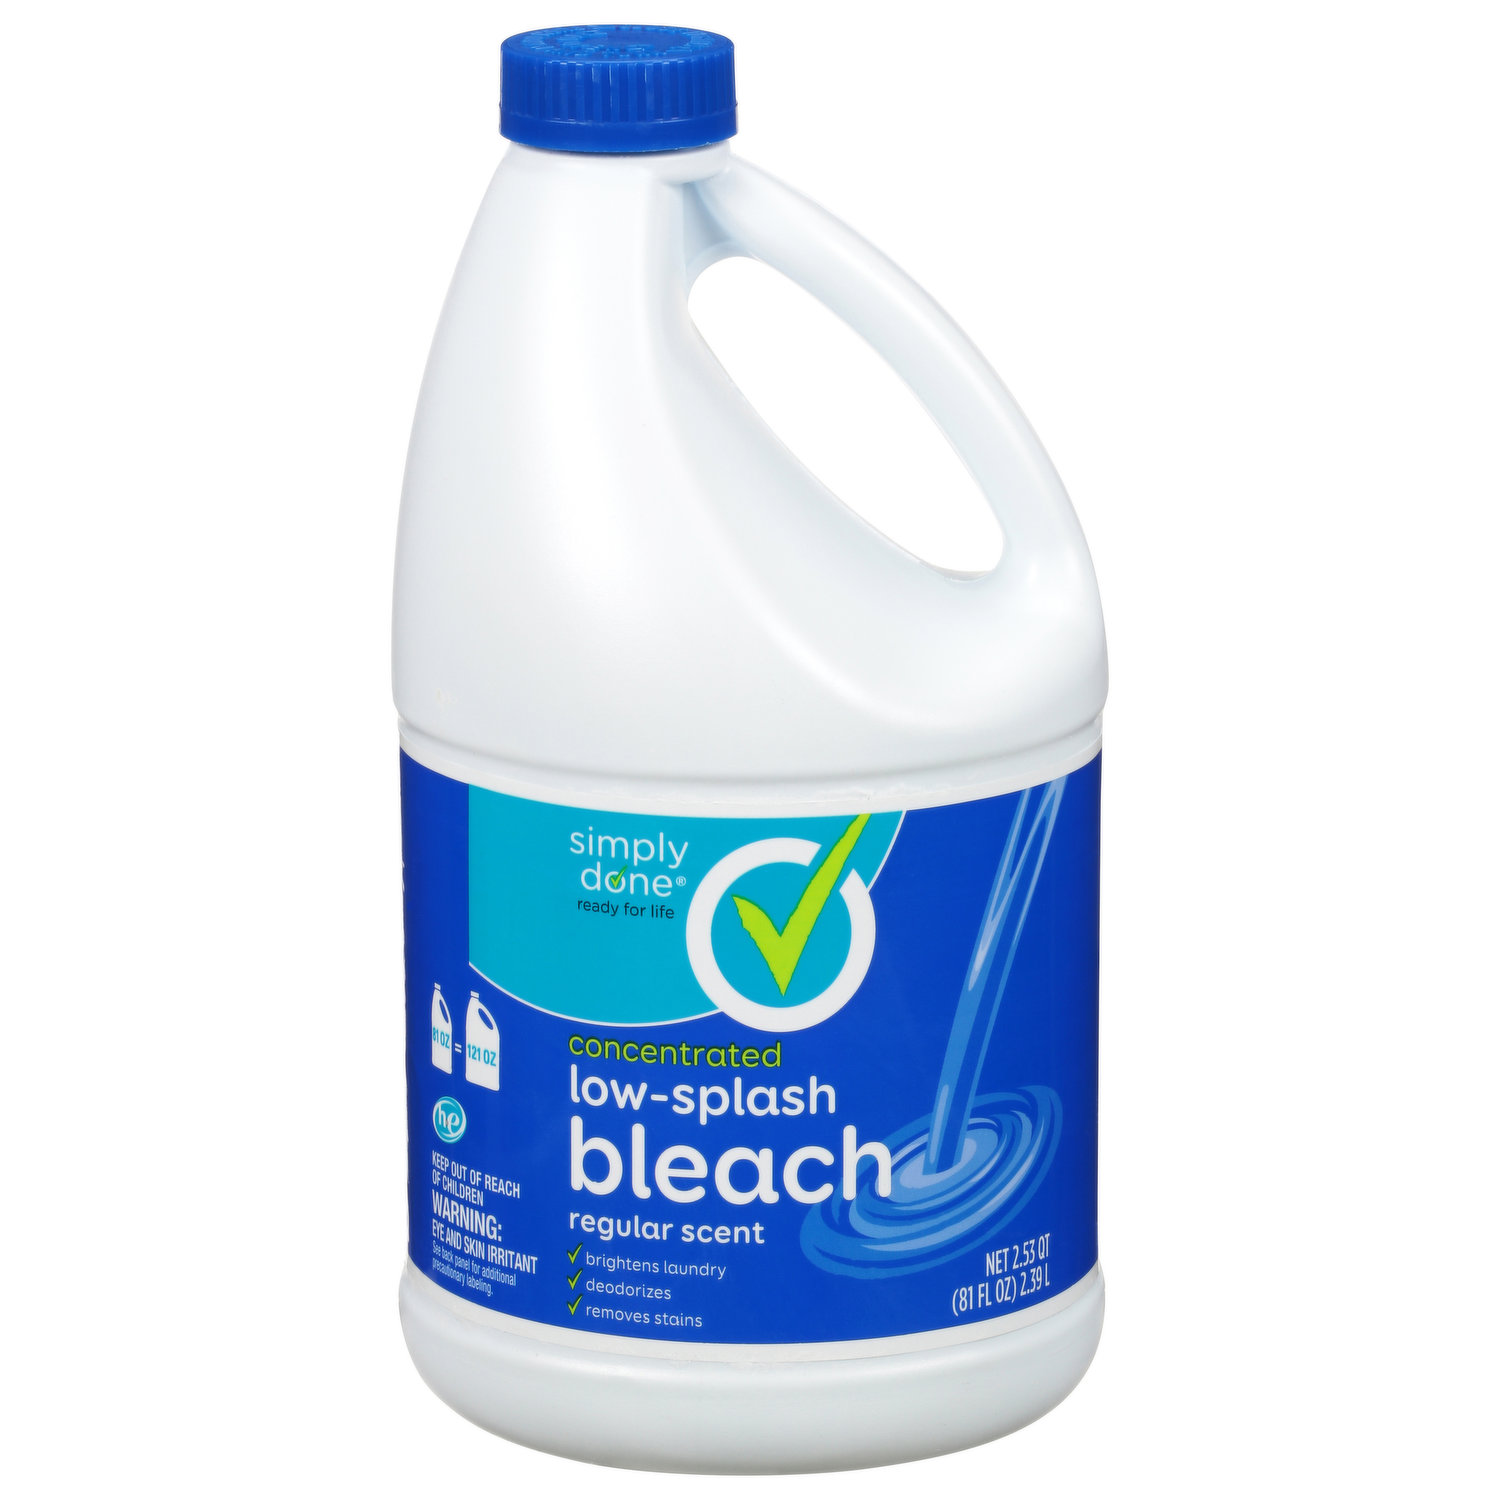 Great Value Low-Splash Bleach, 81 fl oz